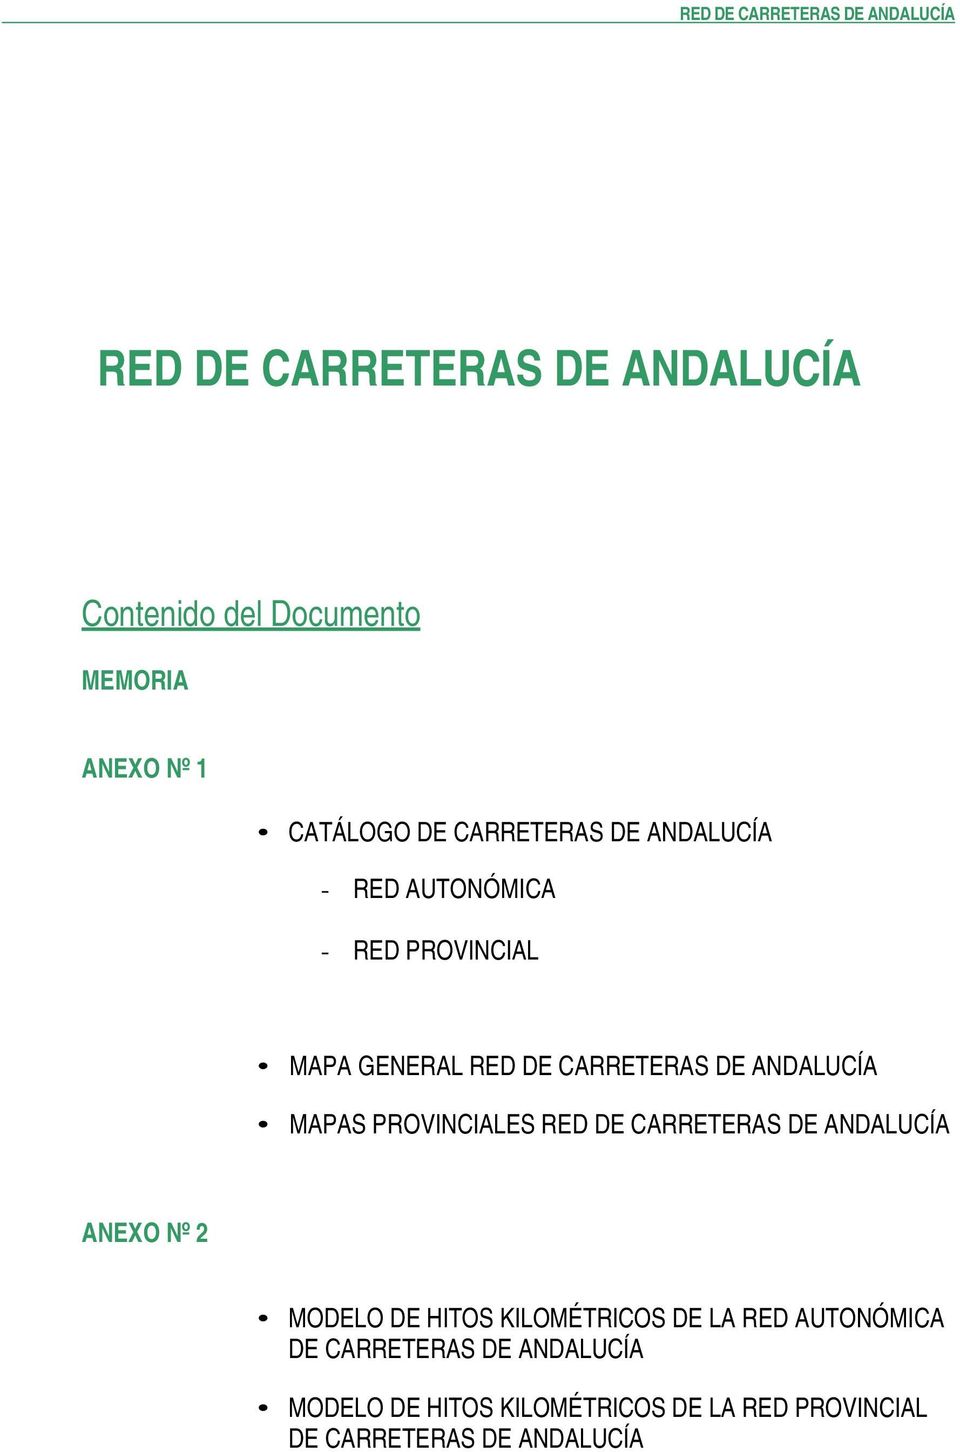 ANDALUCÍA MAPAS PROVINCIALES RED DE CARRETERAS DE ANDALUCÍA ANEXO Nº MODELO DE HITOS KILOMÉTRIS DE LA RED